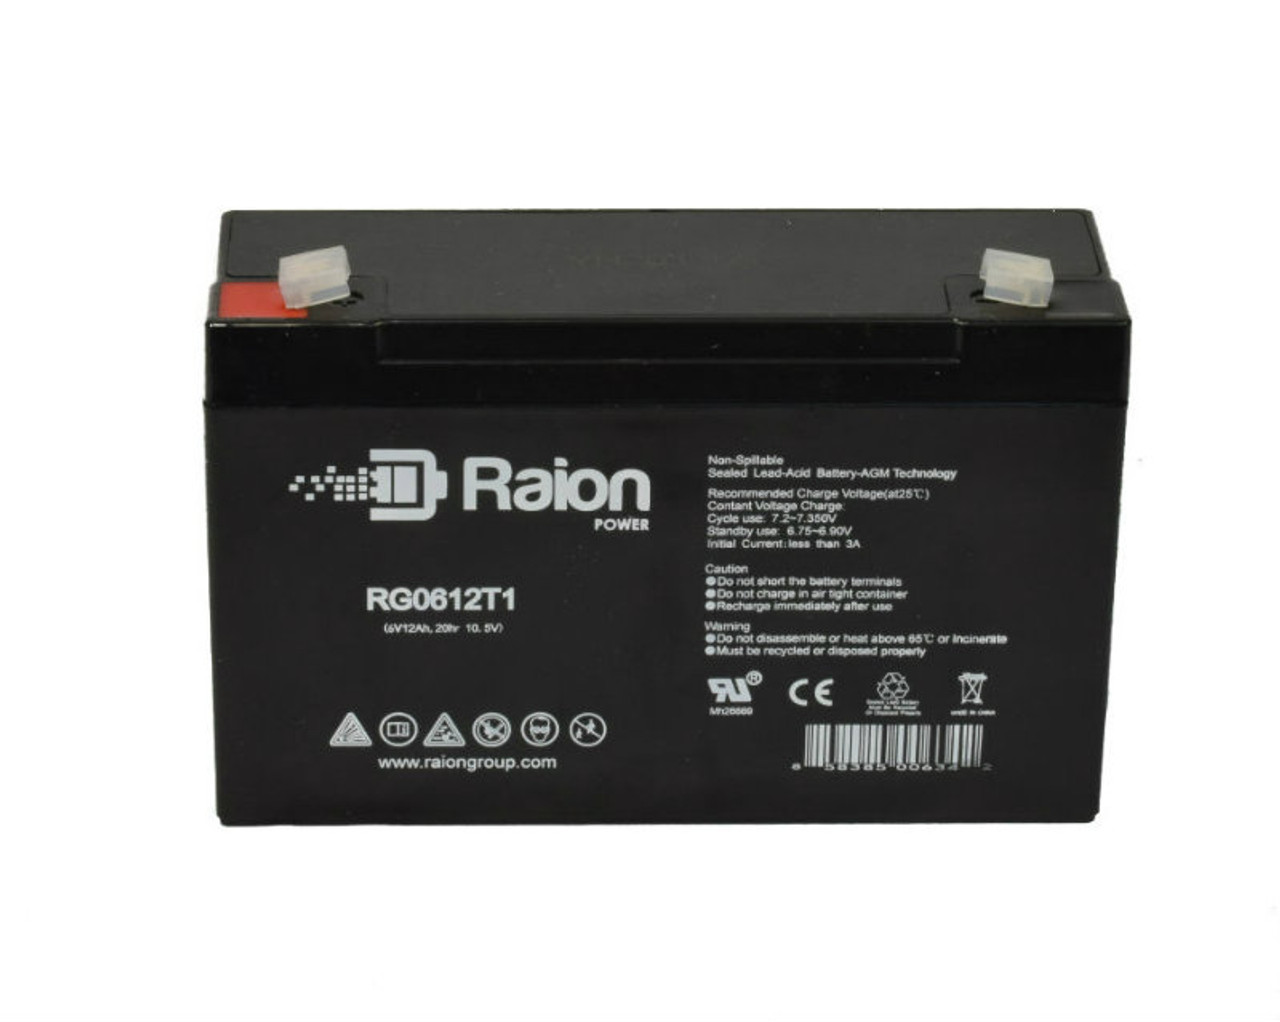 Raion Power RG06120T1 SLA Battery for Chiway SJ6V12Ah